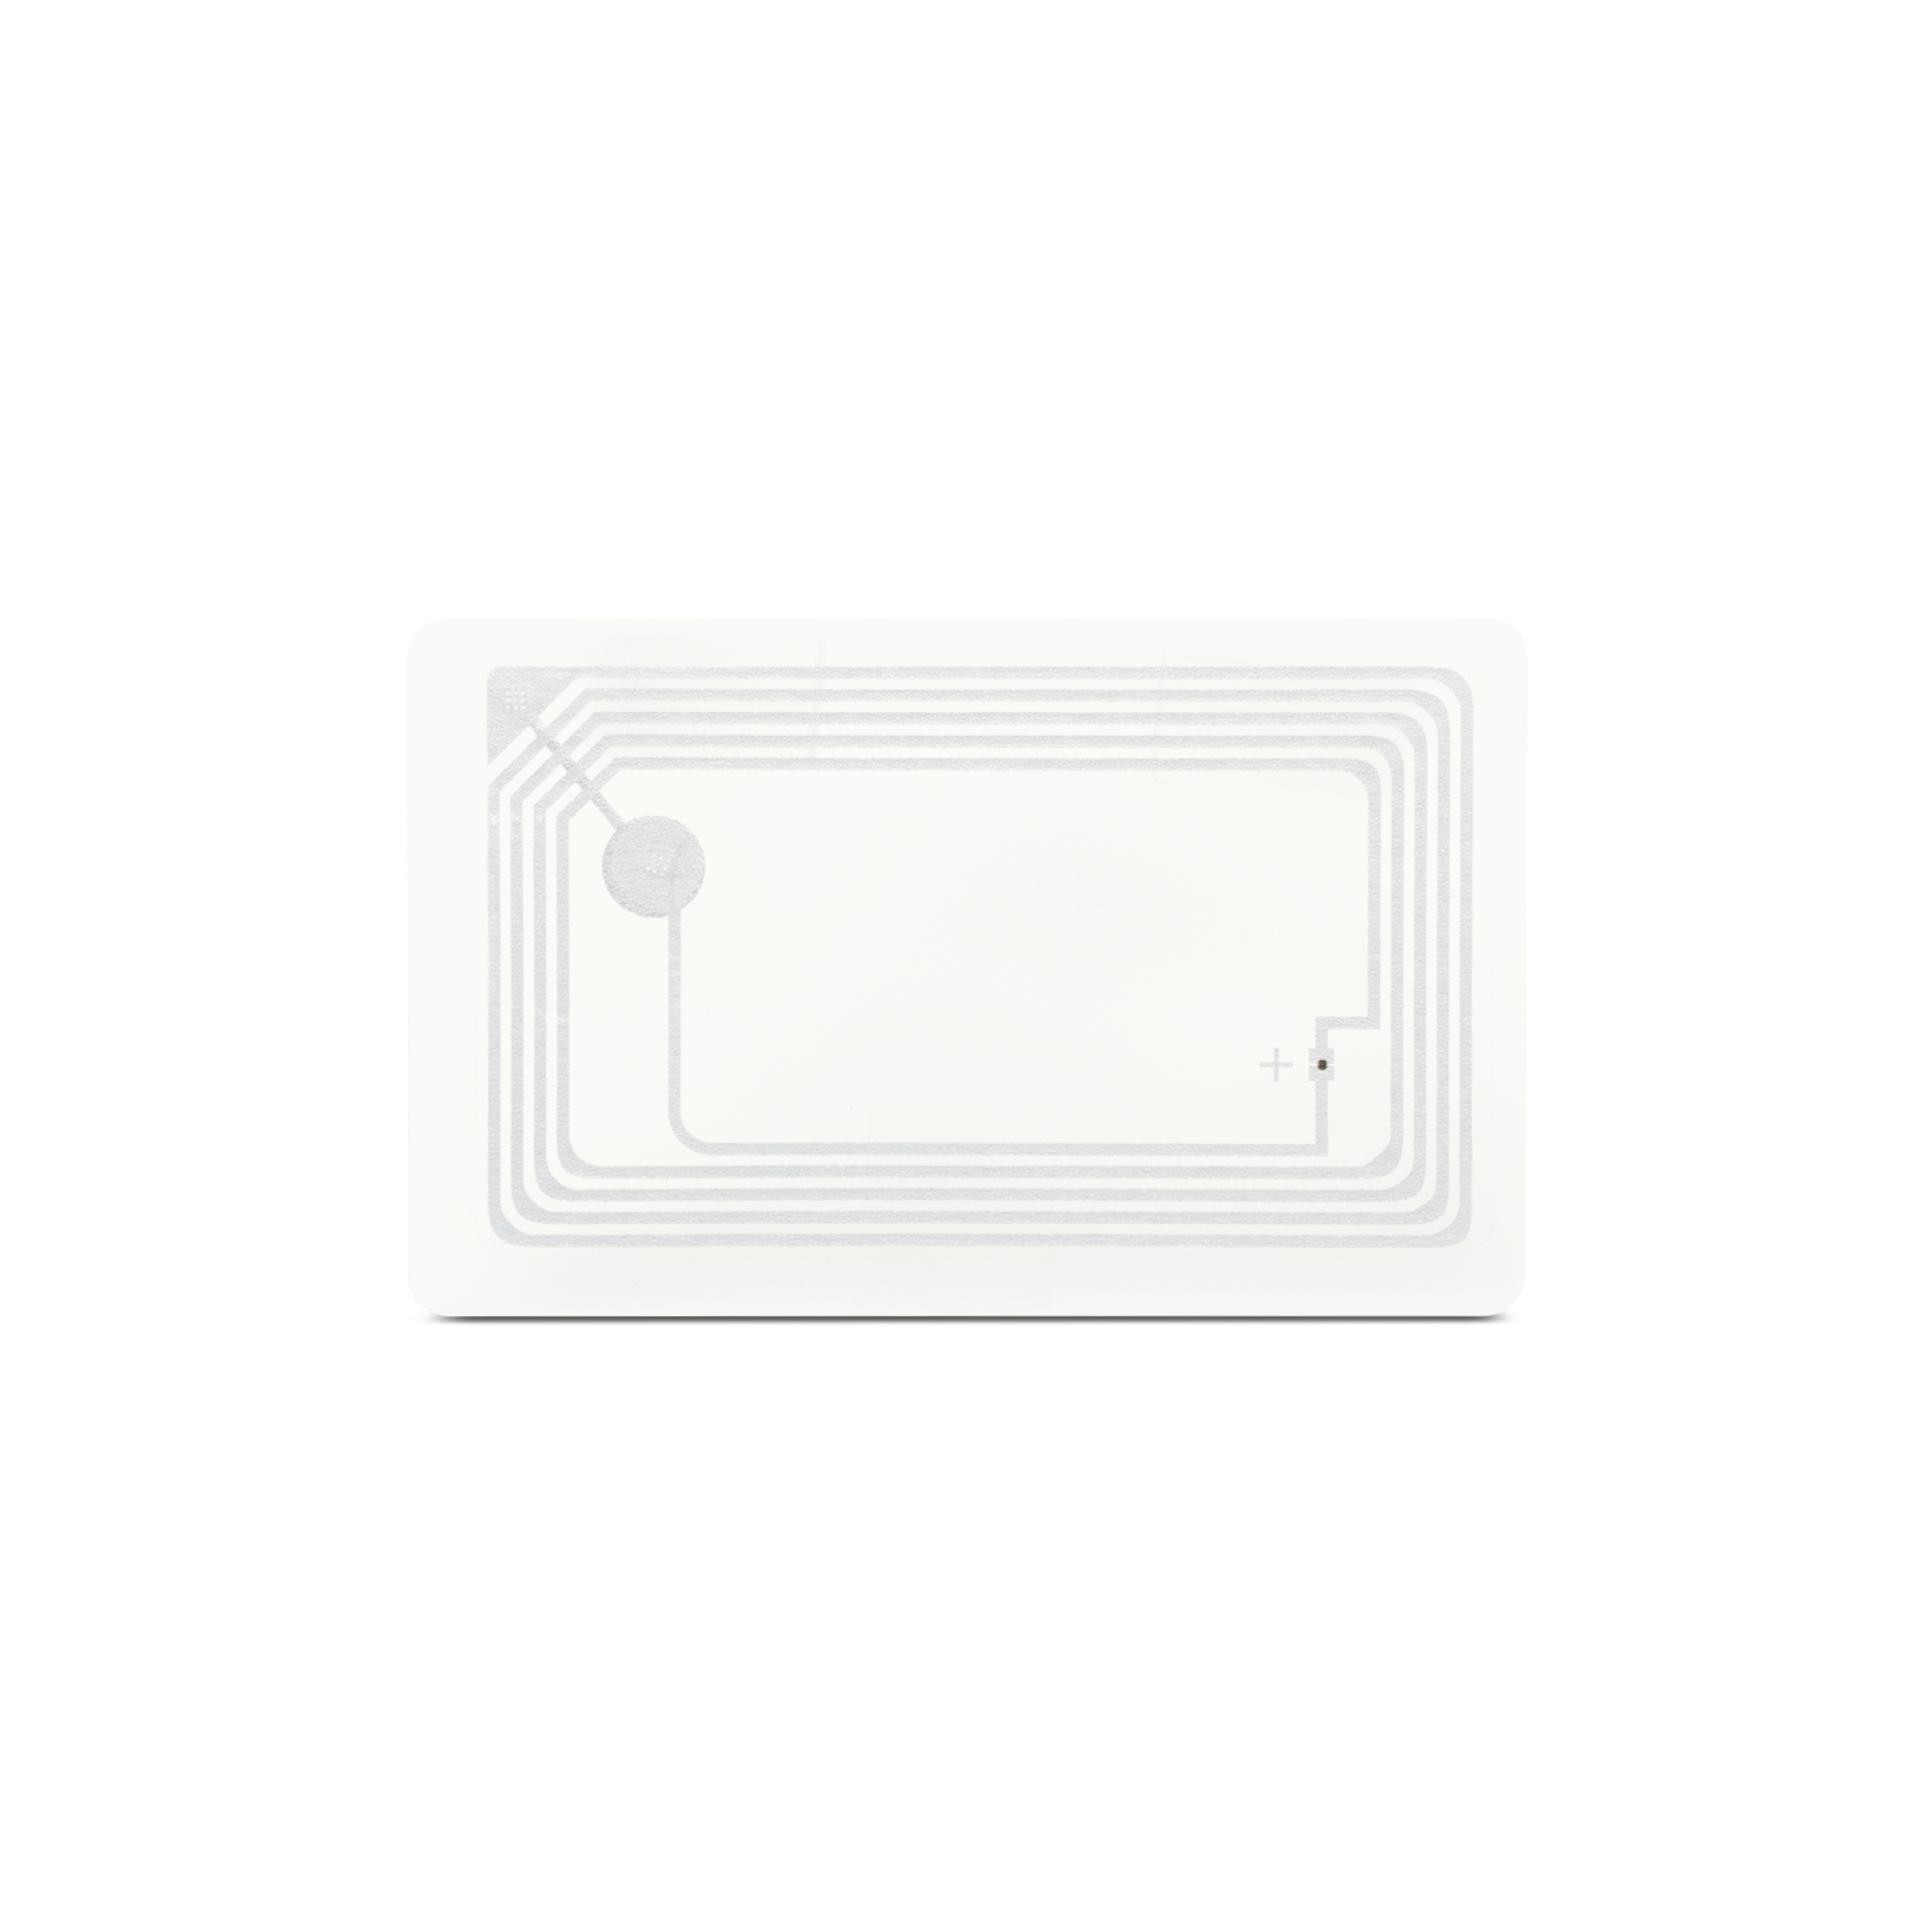 Horizontal stehende transparente NFC Karte 